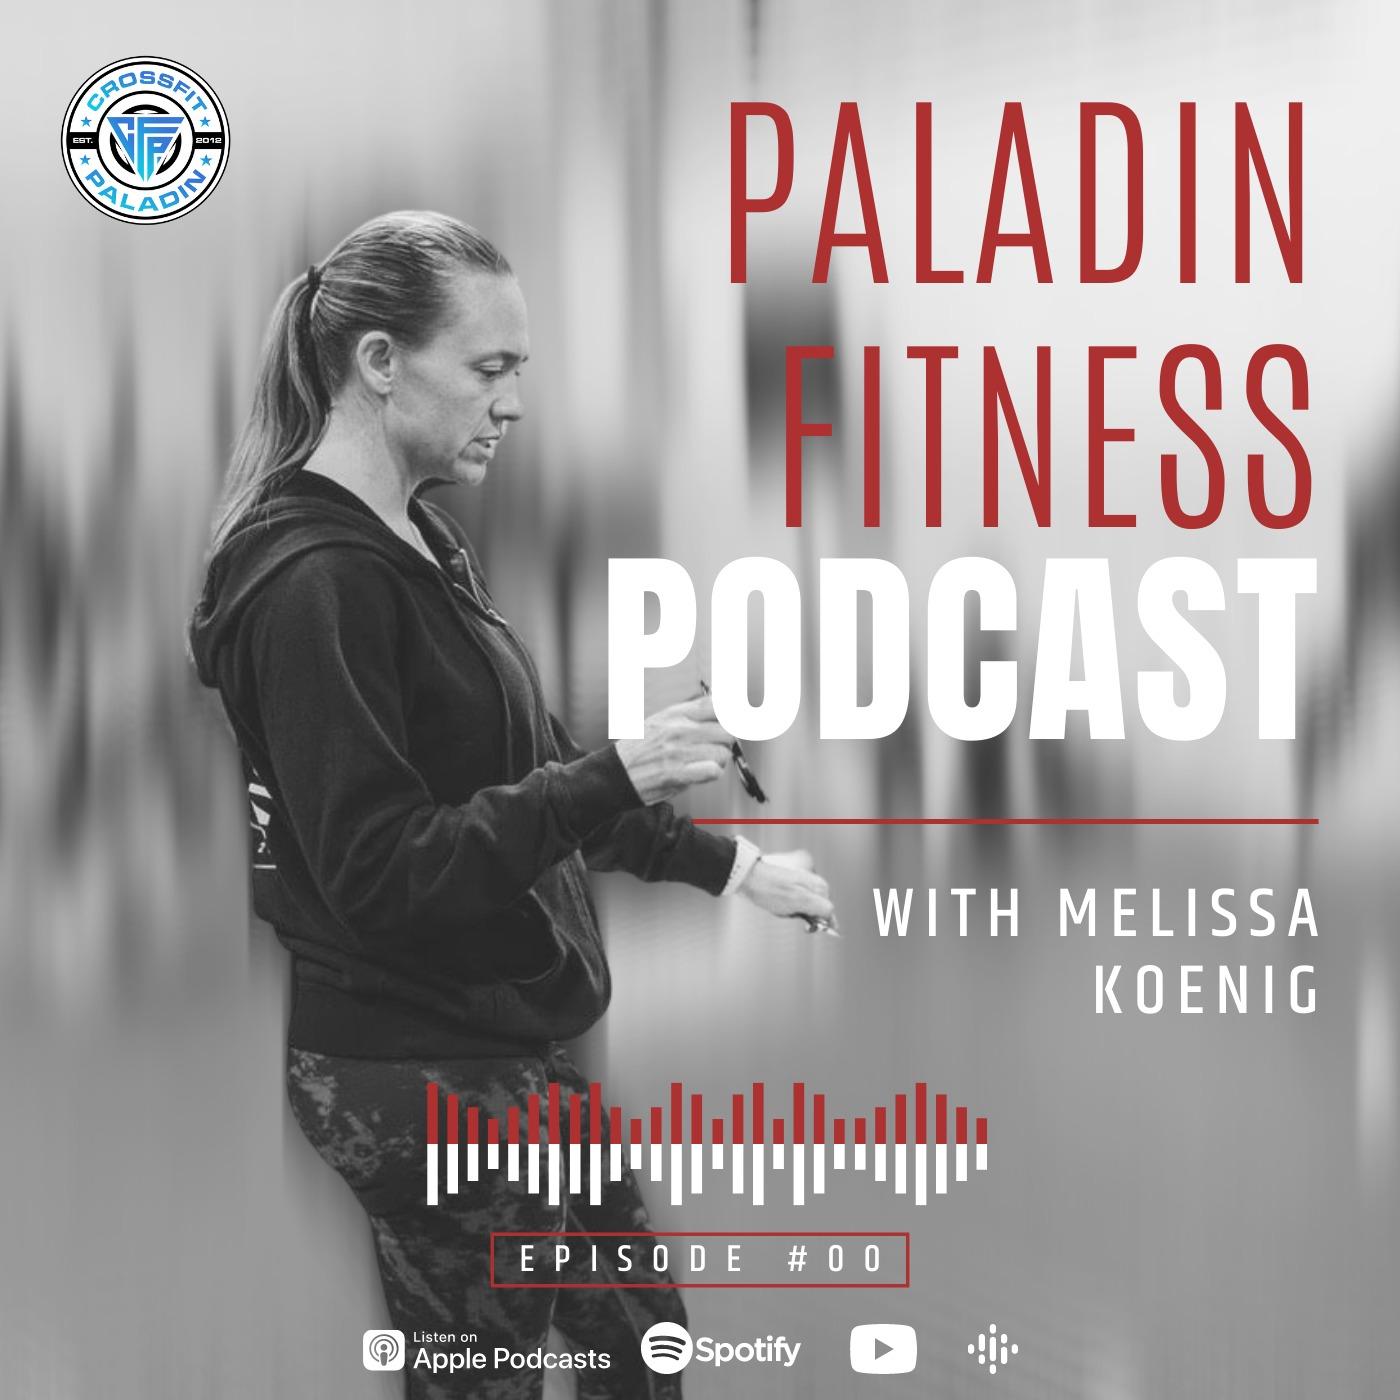 The Paladin Podcast